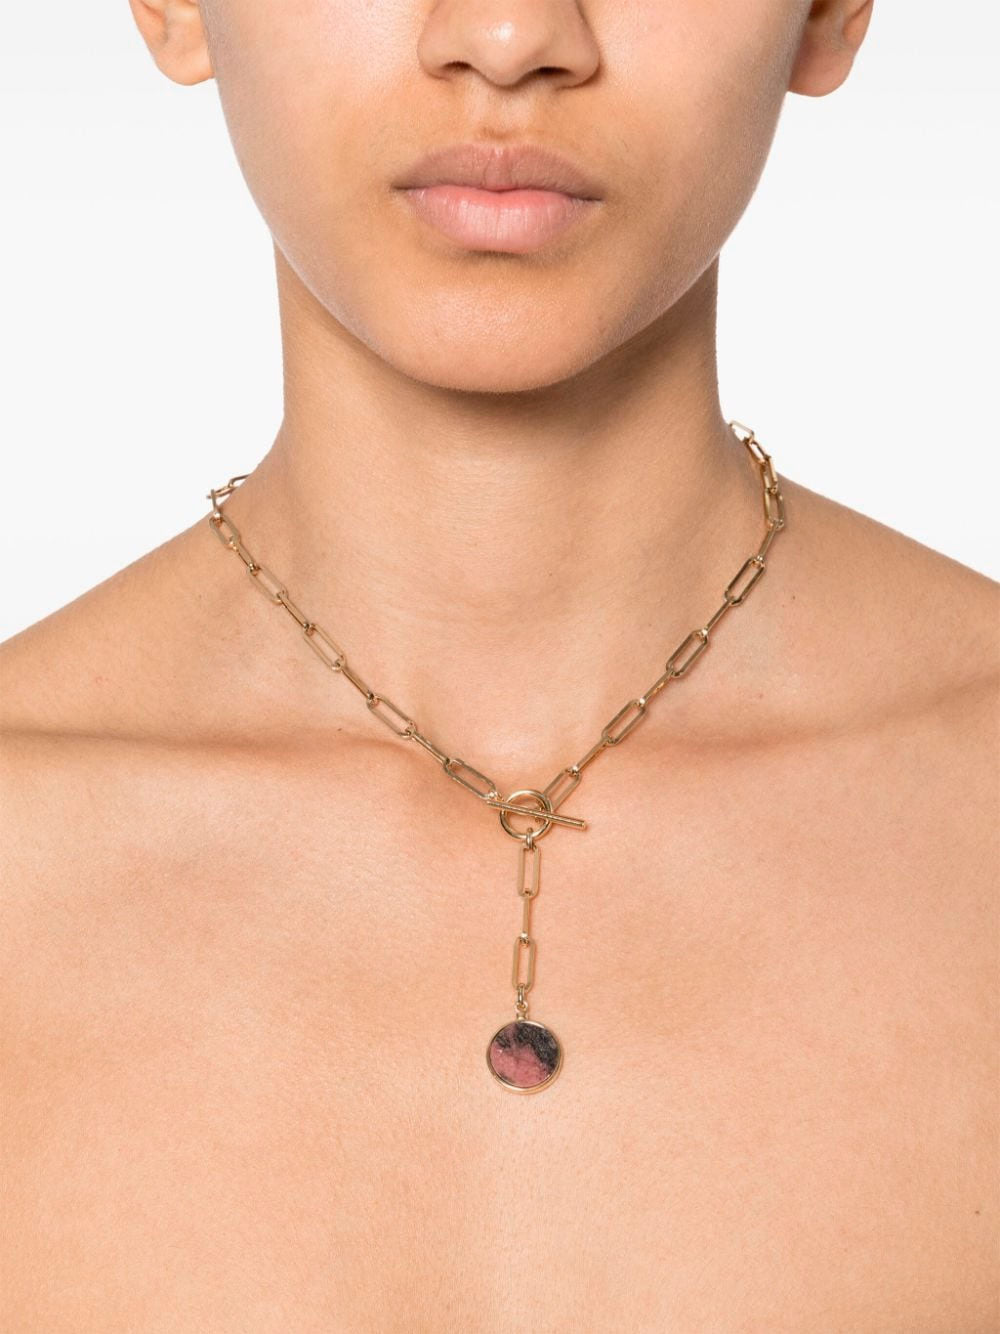 Stone-pendant necklace